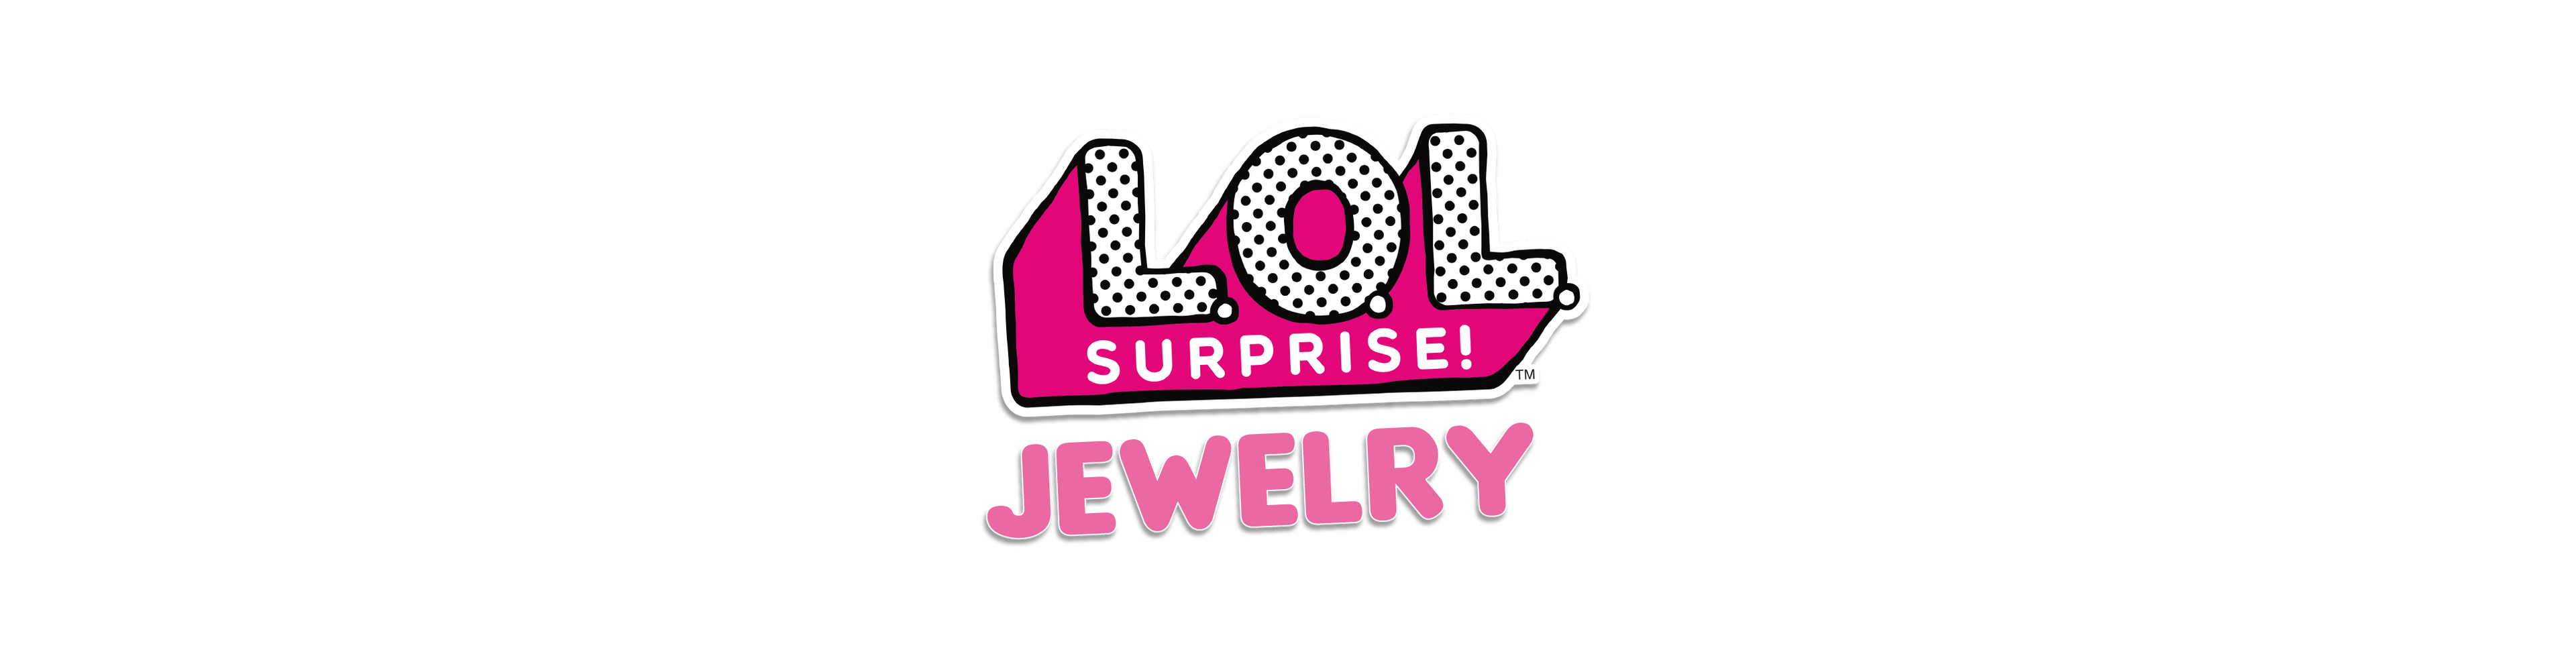 lol jewelry logo small 3